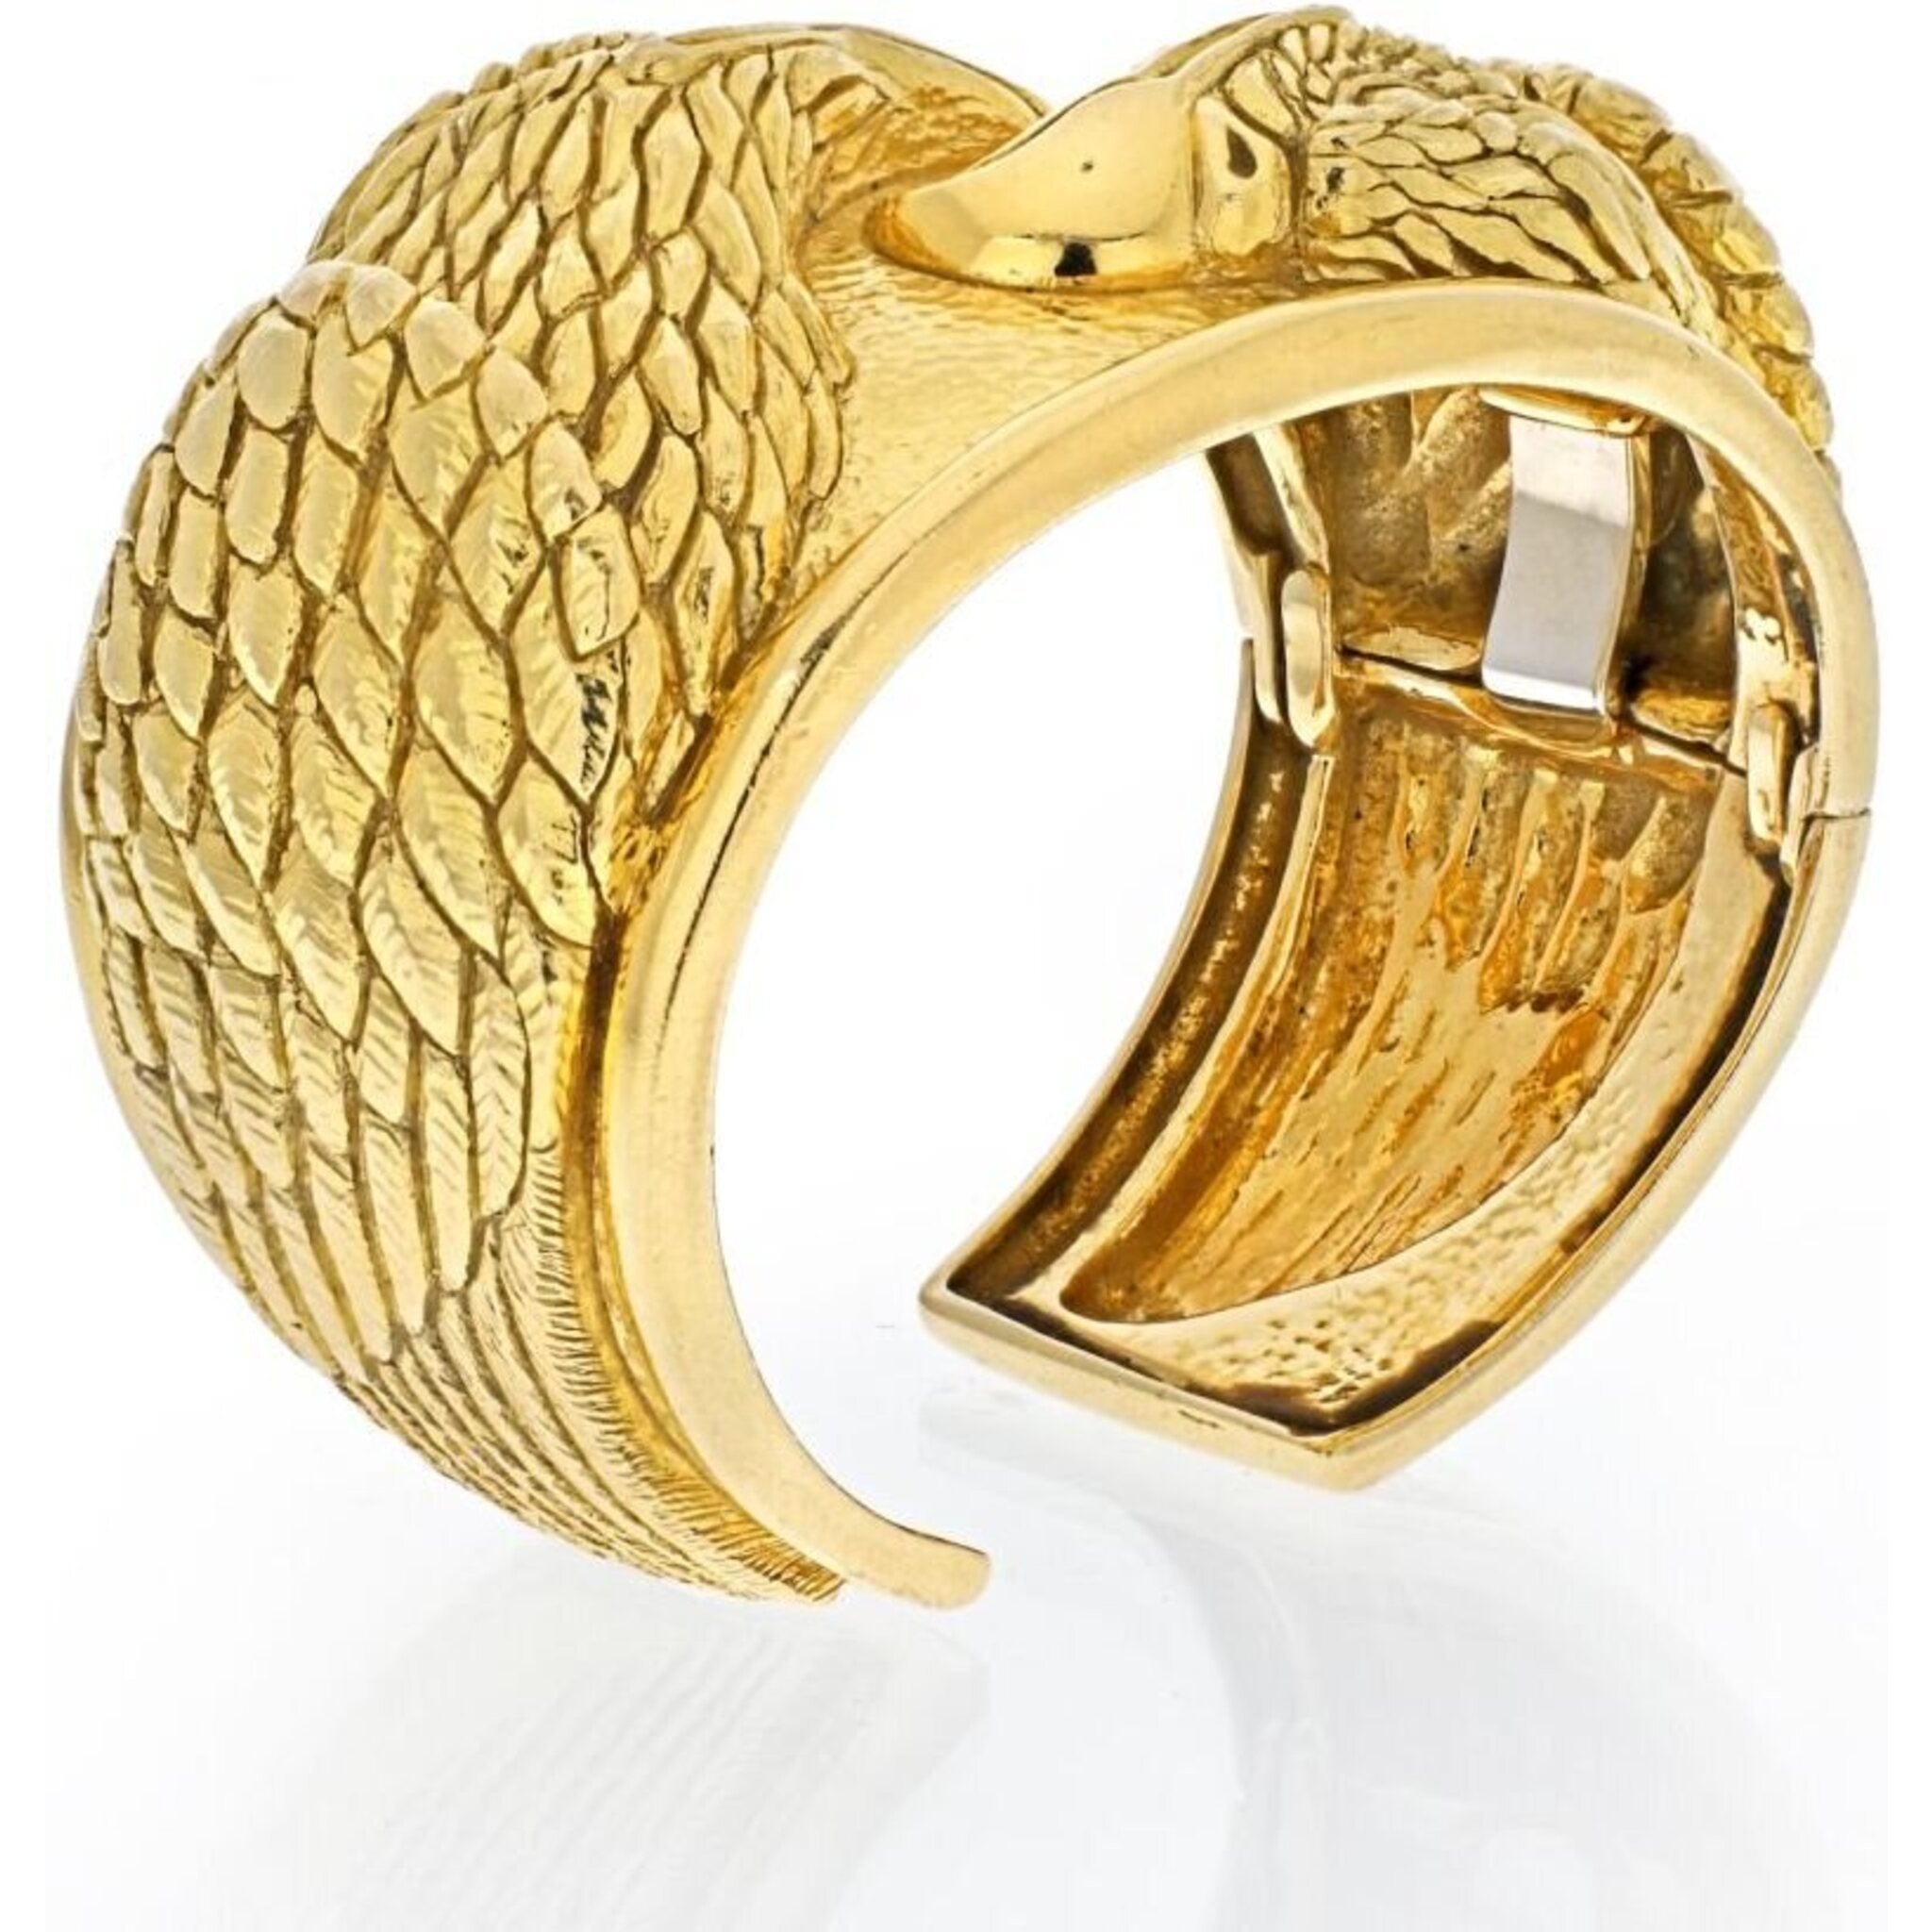 Fashion Jewelry Cuff Bracelet Bangle Chain Women Wristband Elegant Gold  Silver | eBay